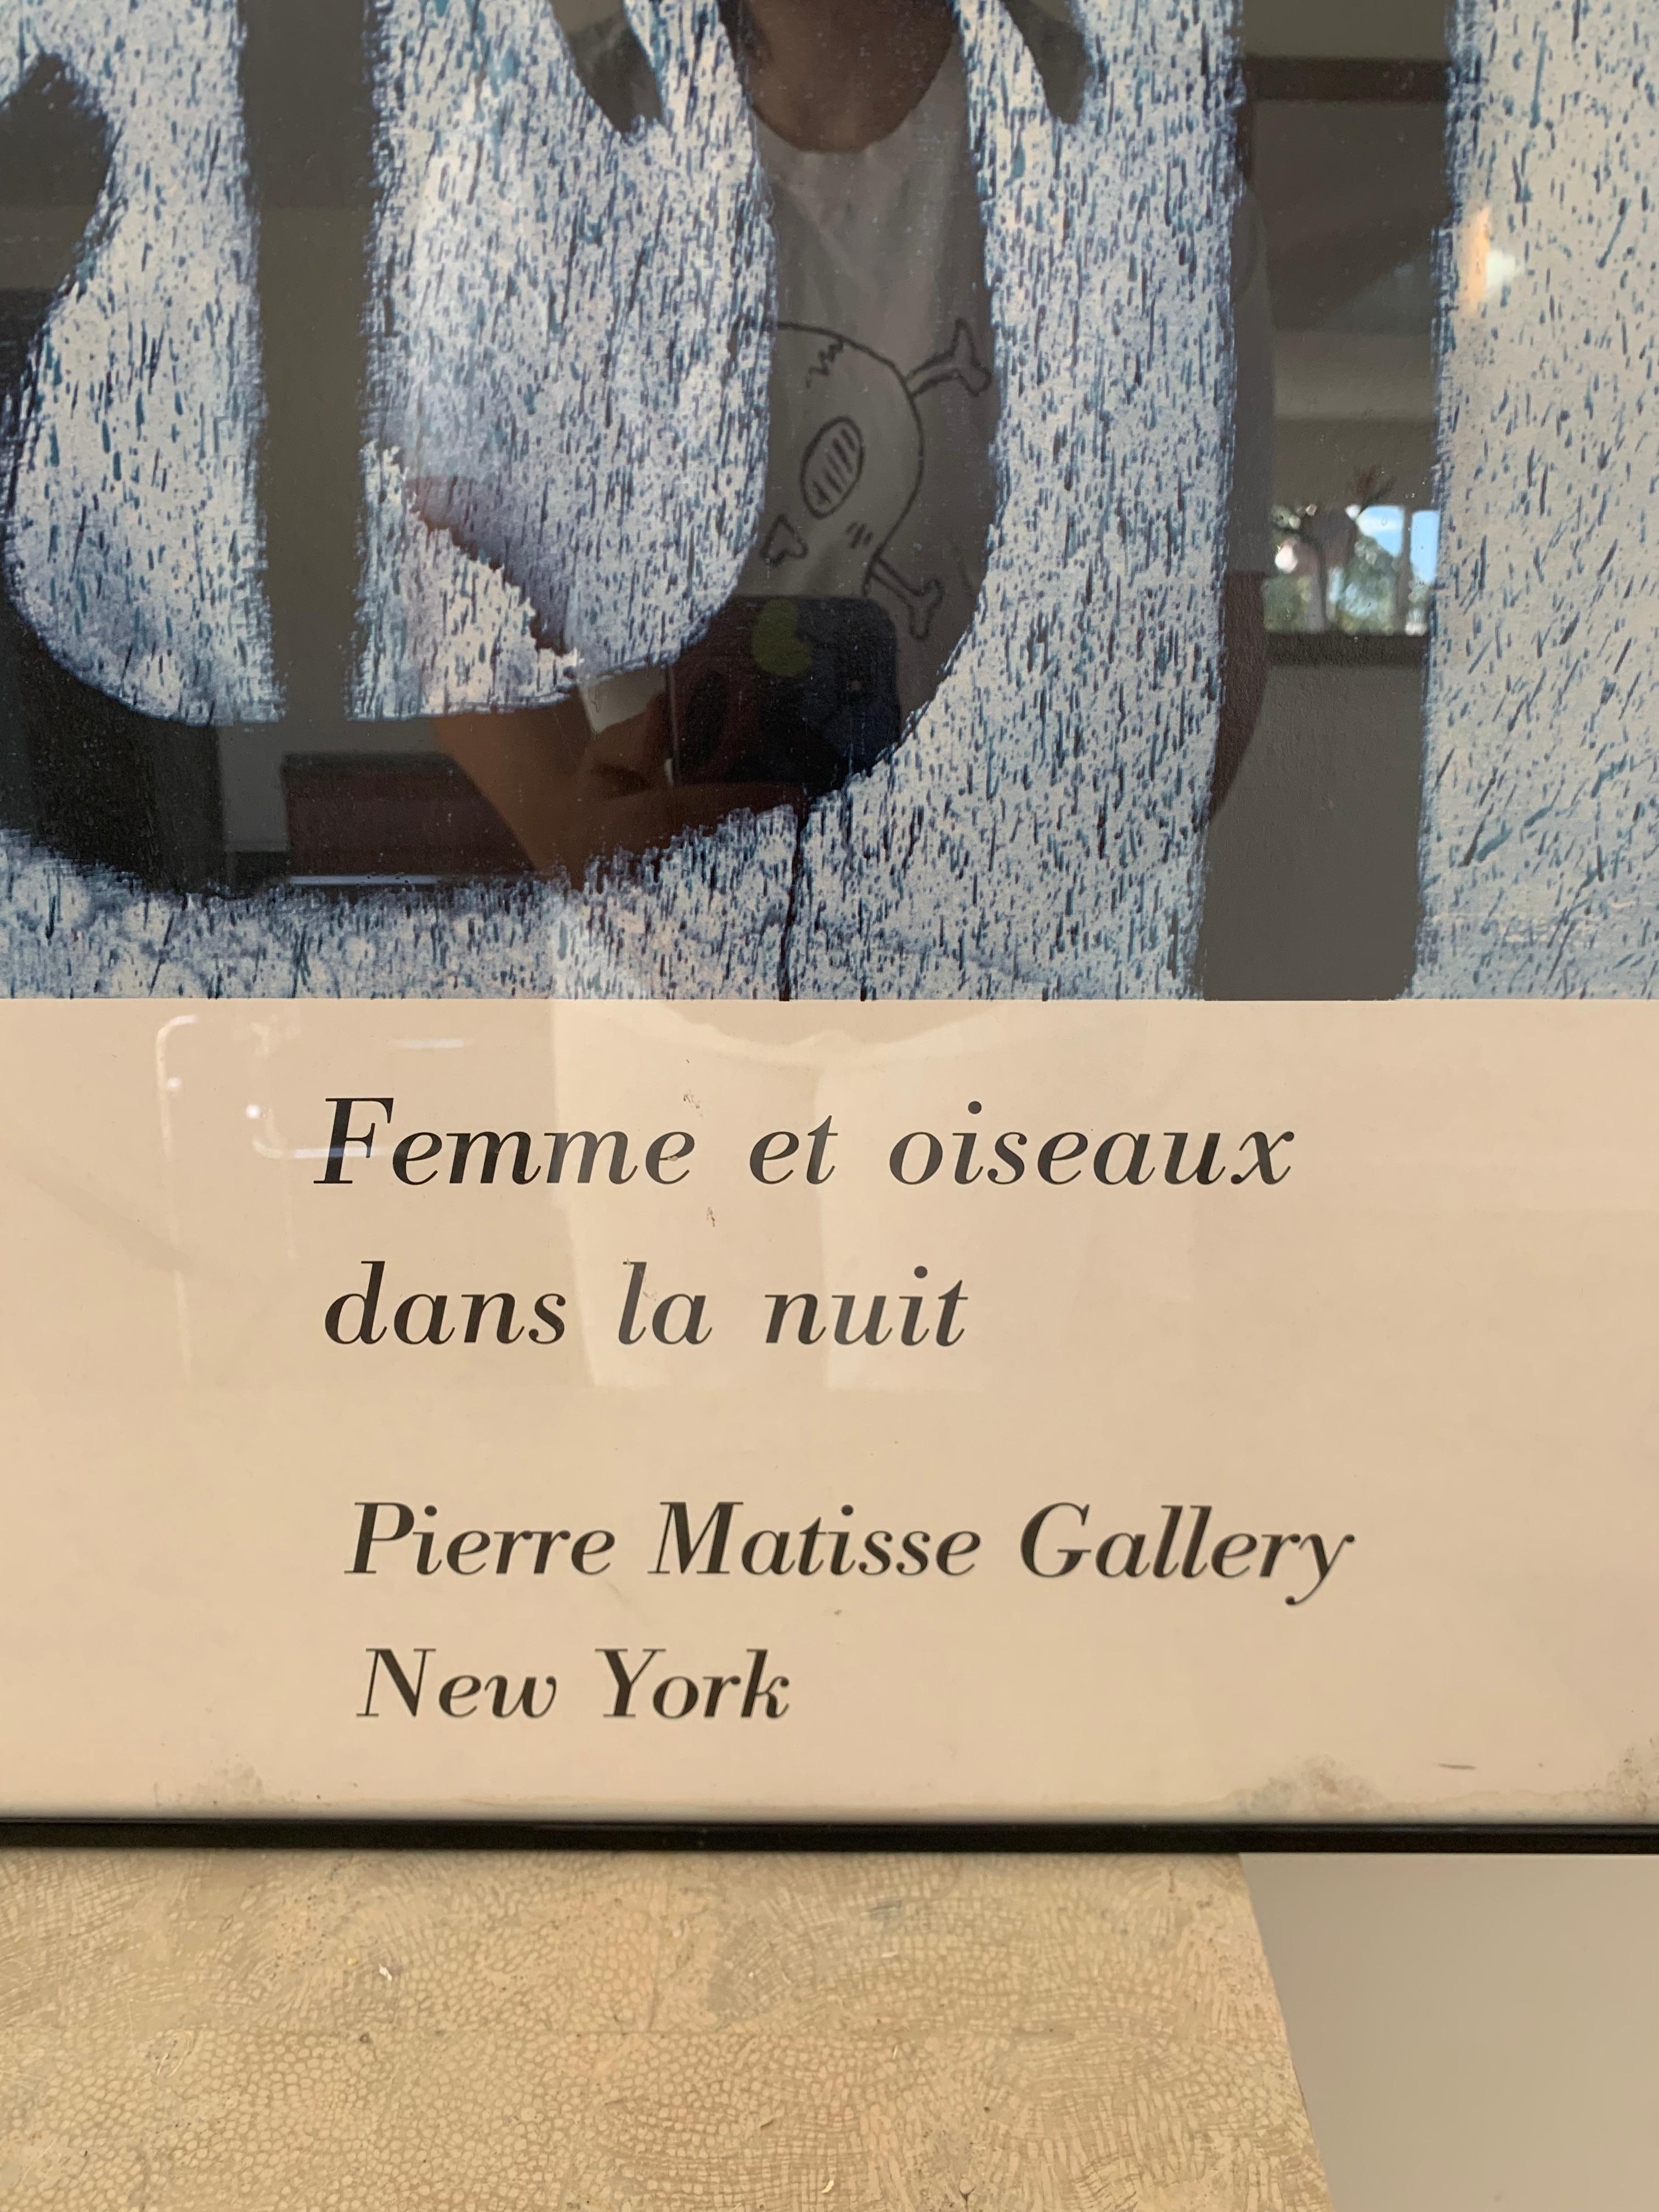 Late 20th Century Huge Framed Joan Miró Poster « Femme Et Oiseaux », Pierre Matisse Gallery 1987